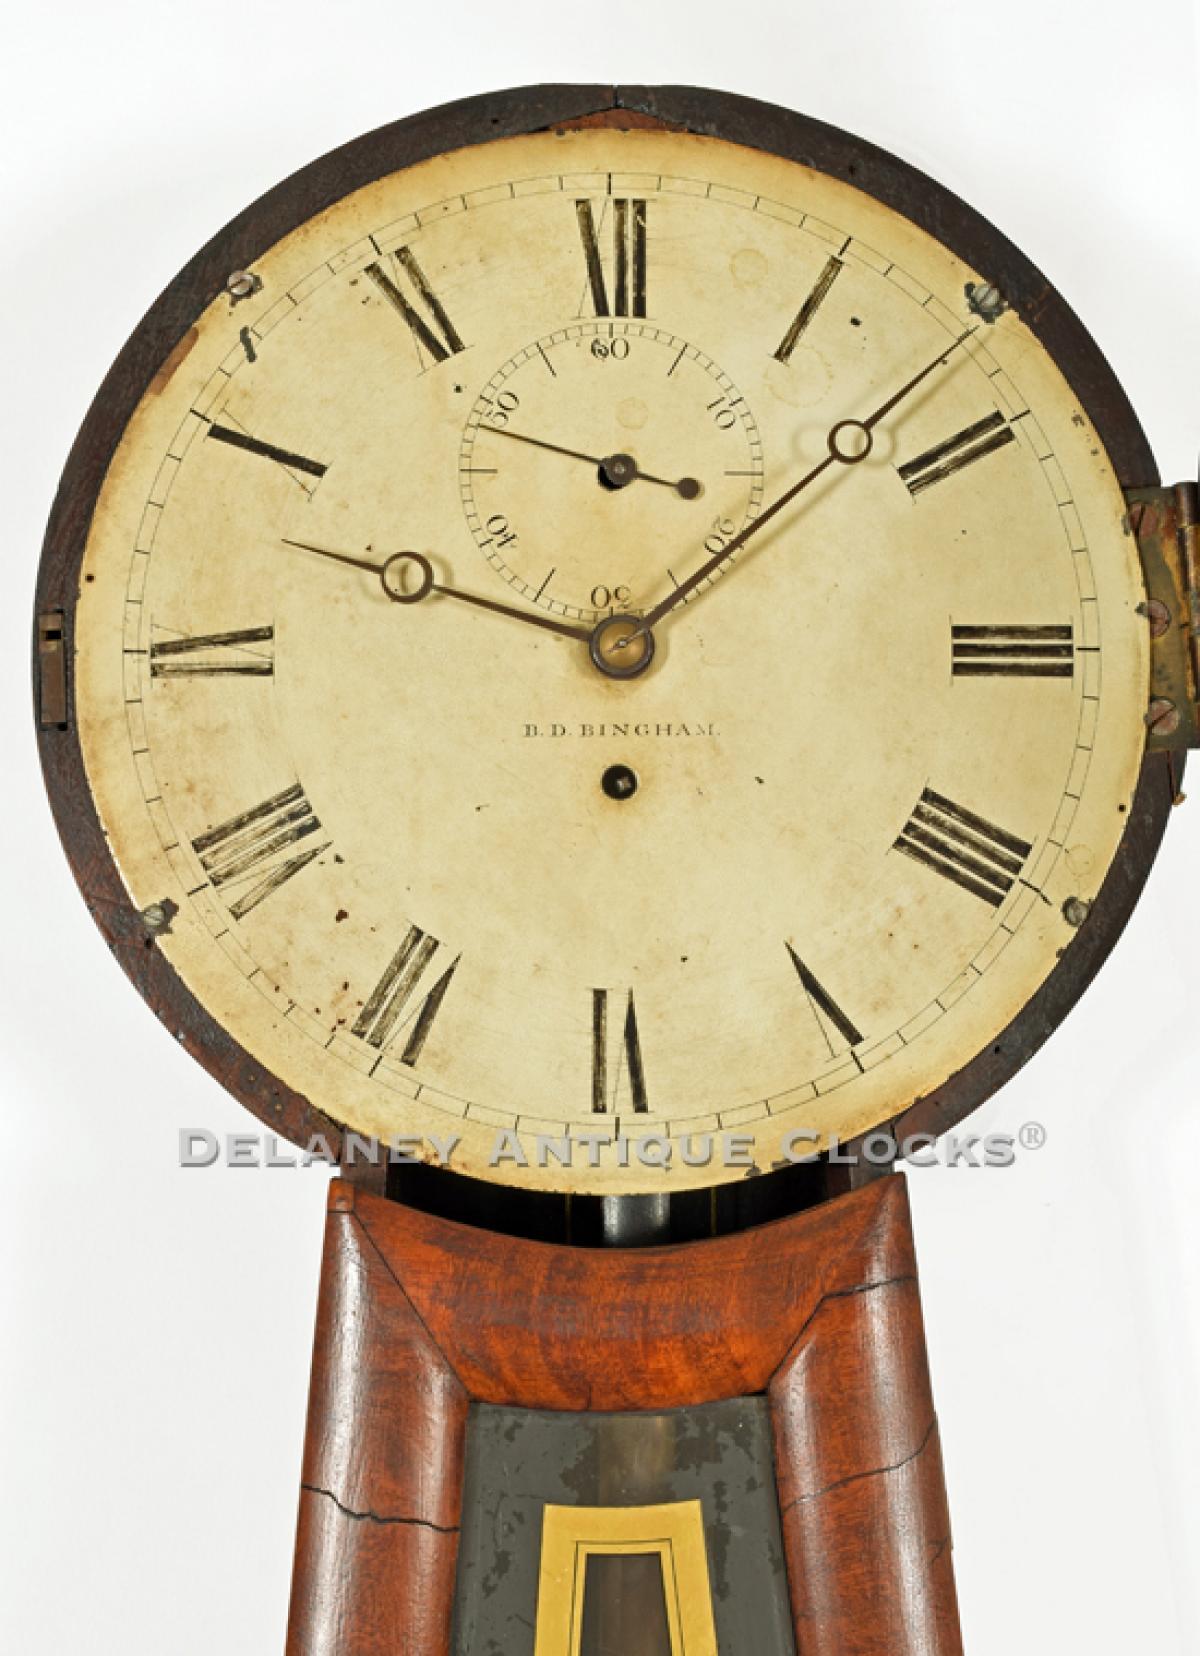 Bingham Nashua, NH. A wall clock. 219122. Delaney Antique Clocks.